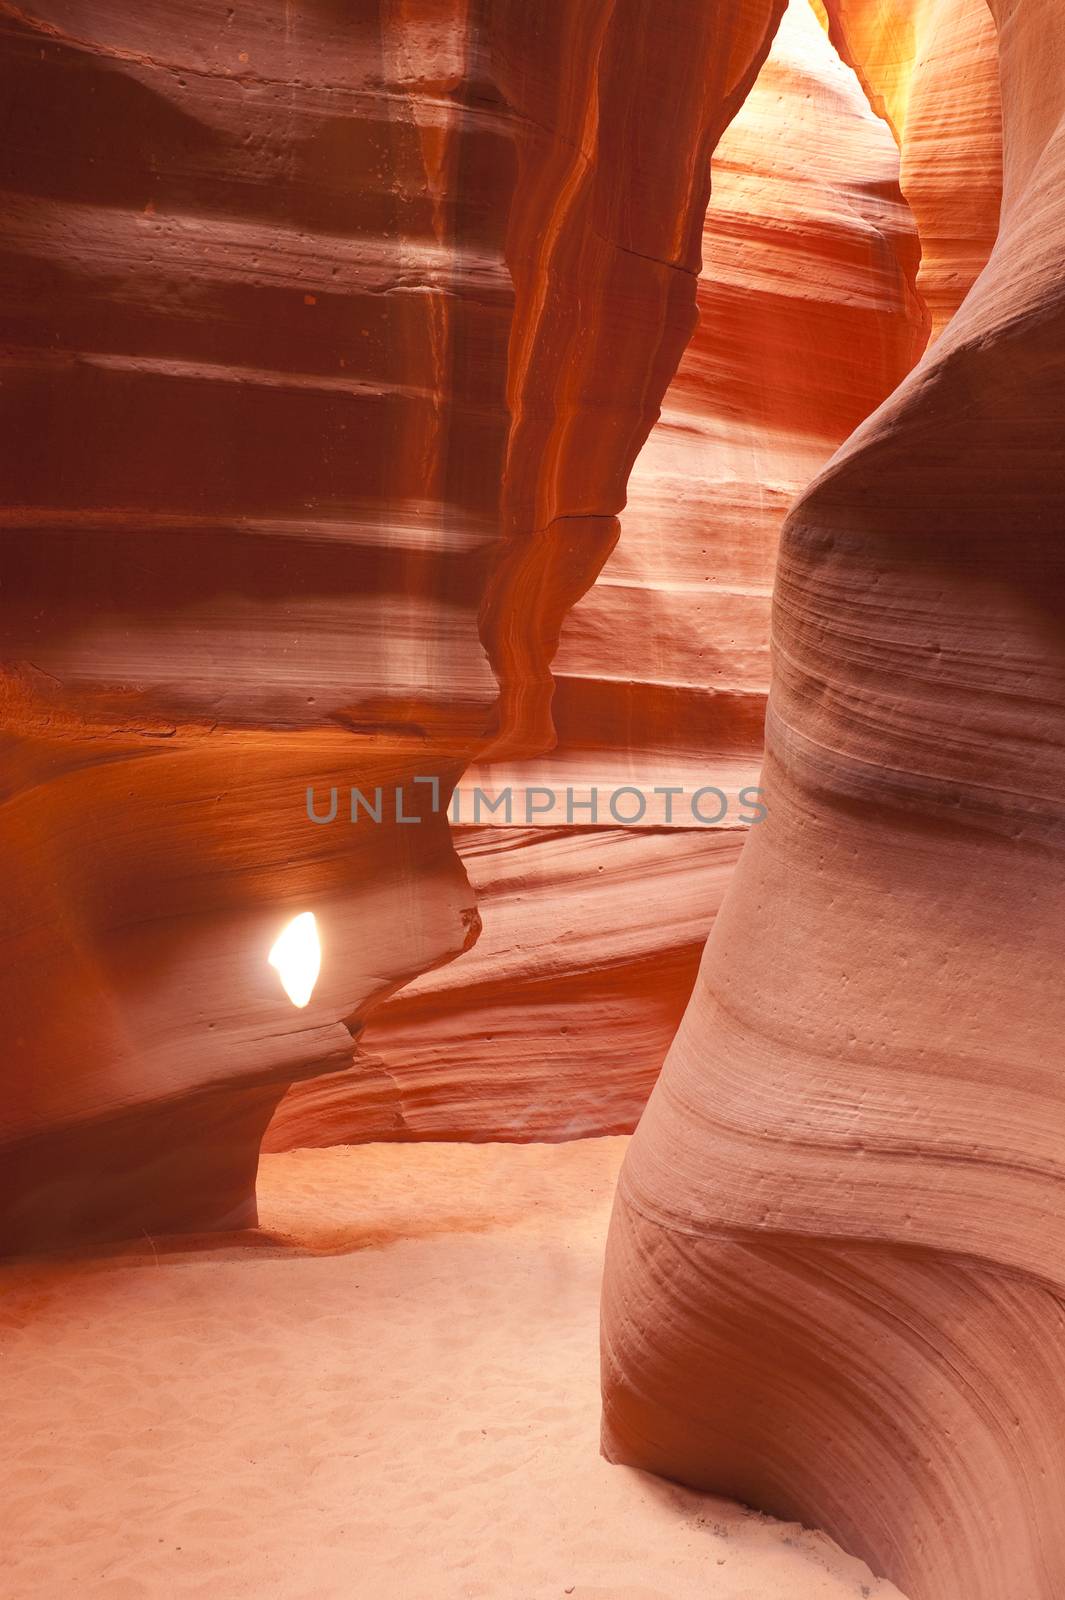 Focused Beam Sunlight Reaches Floor Antelope Canyon Arizona Southwest by ChrisBoswell